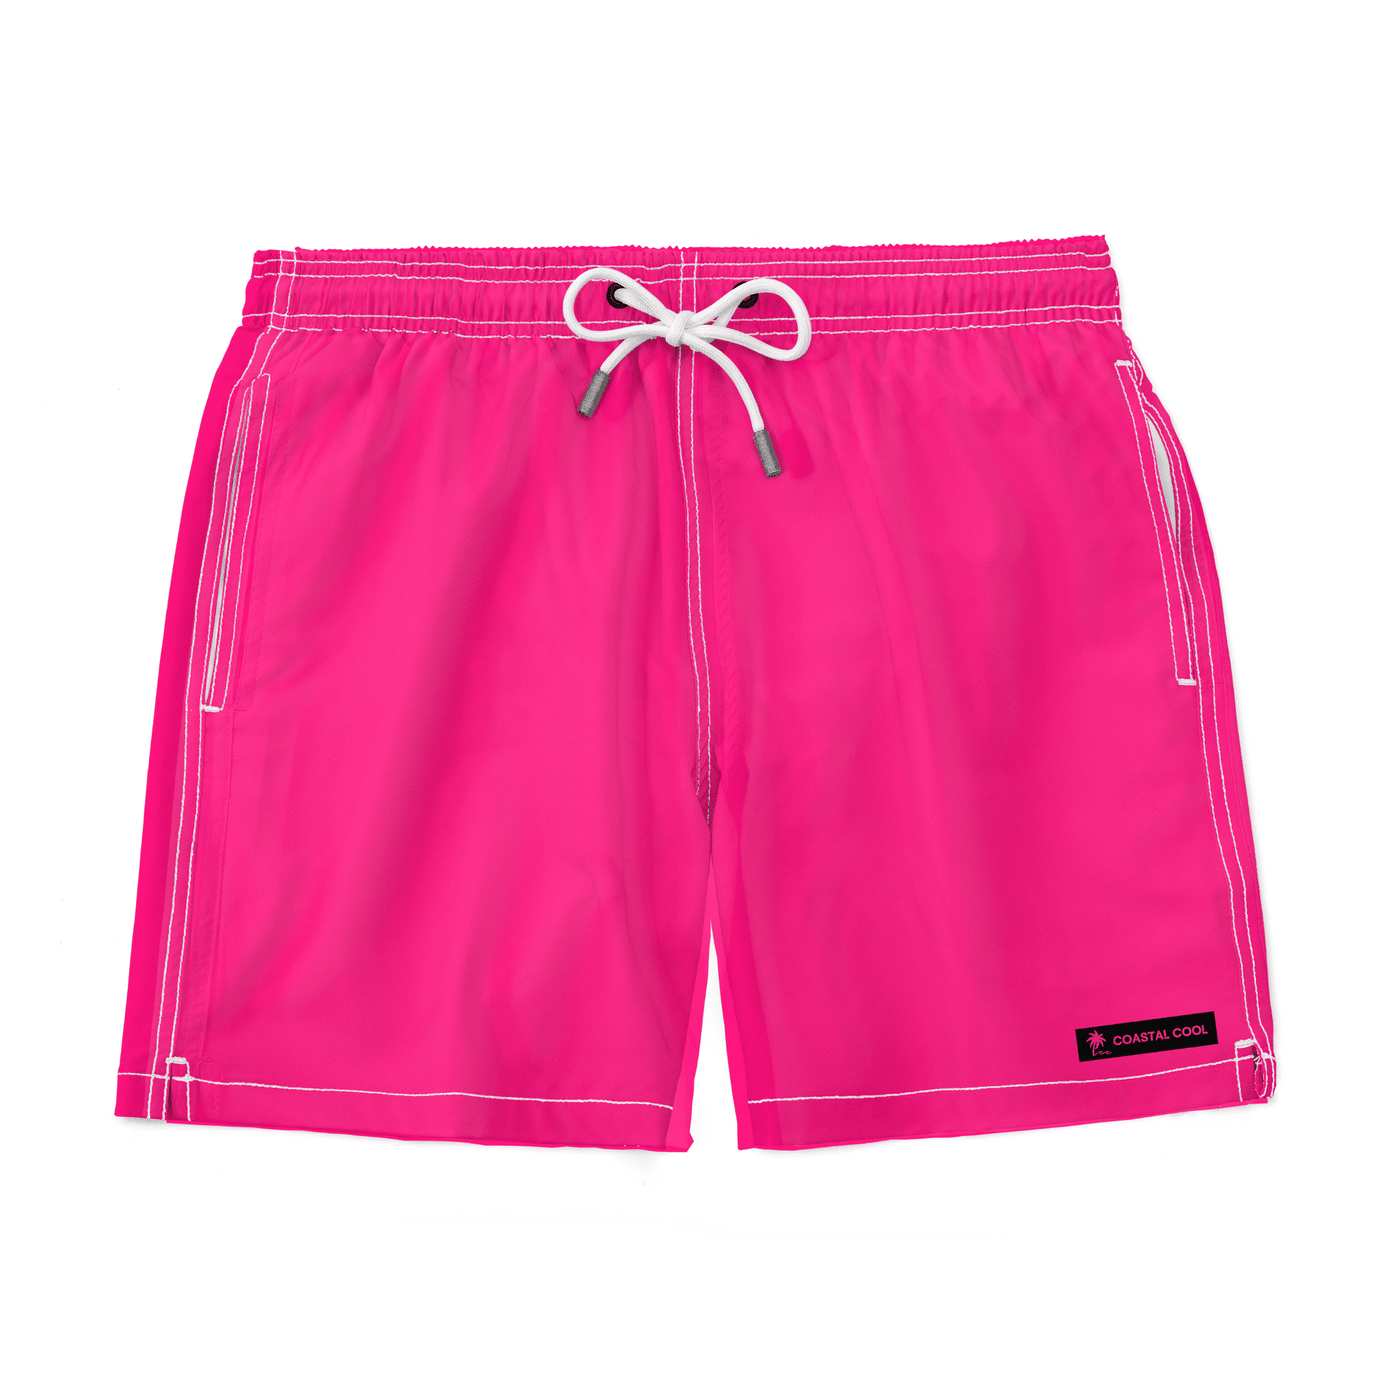 Neon Pink Swim Trunks - Coastal Cool - Swimwear and Beachwear - Recycled fabrics